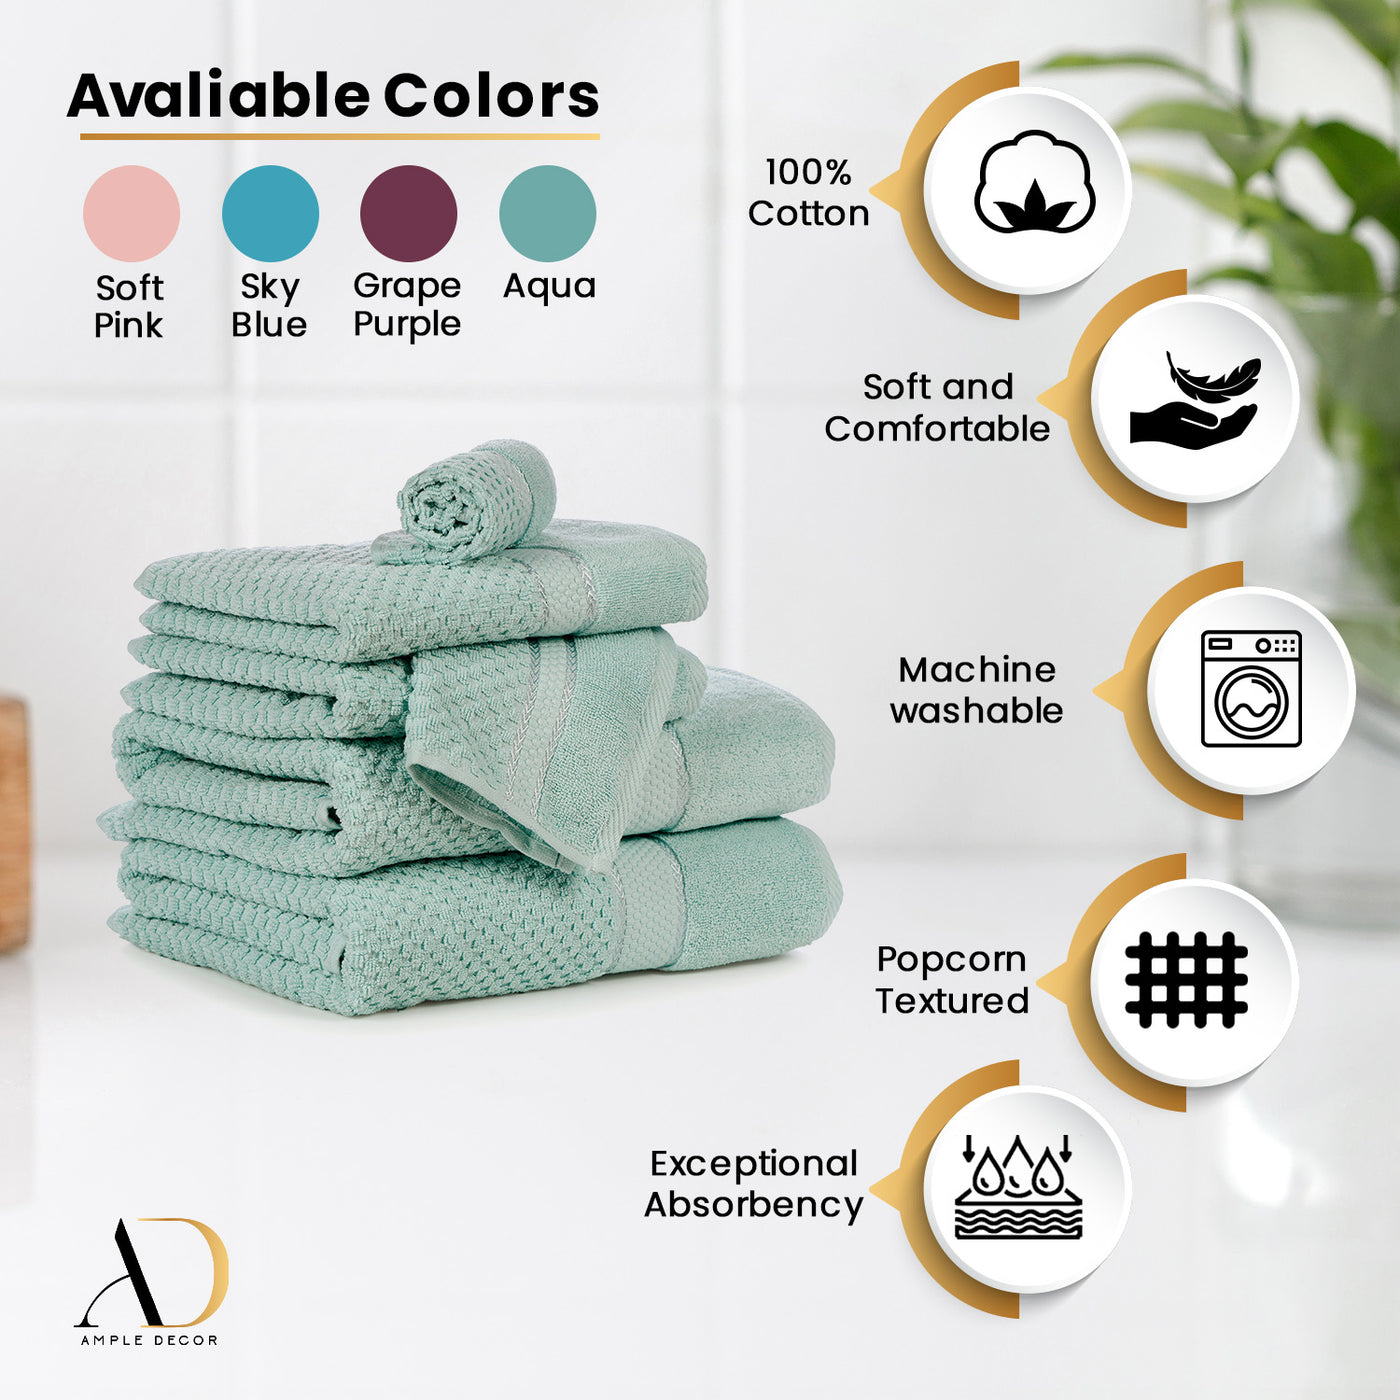 Mulaayam Collection Bath Towel Set of 4 - 30 X 54 Inch